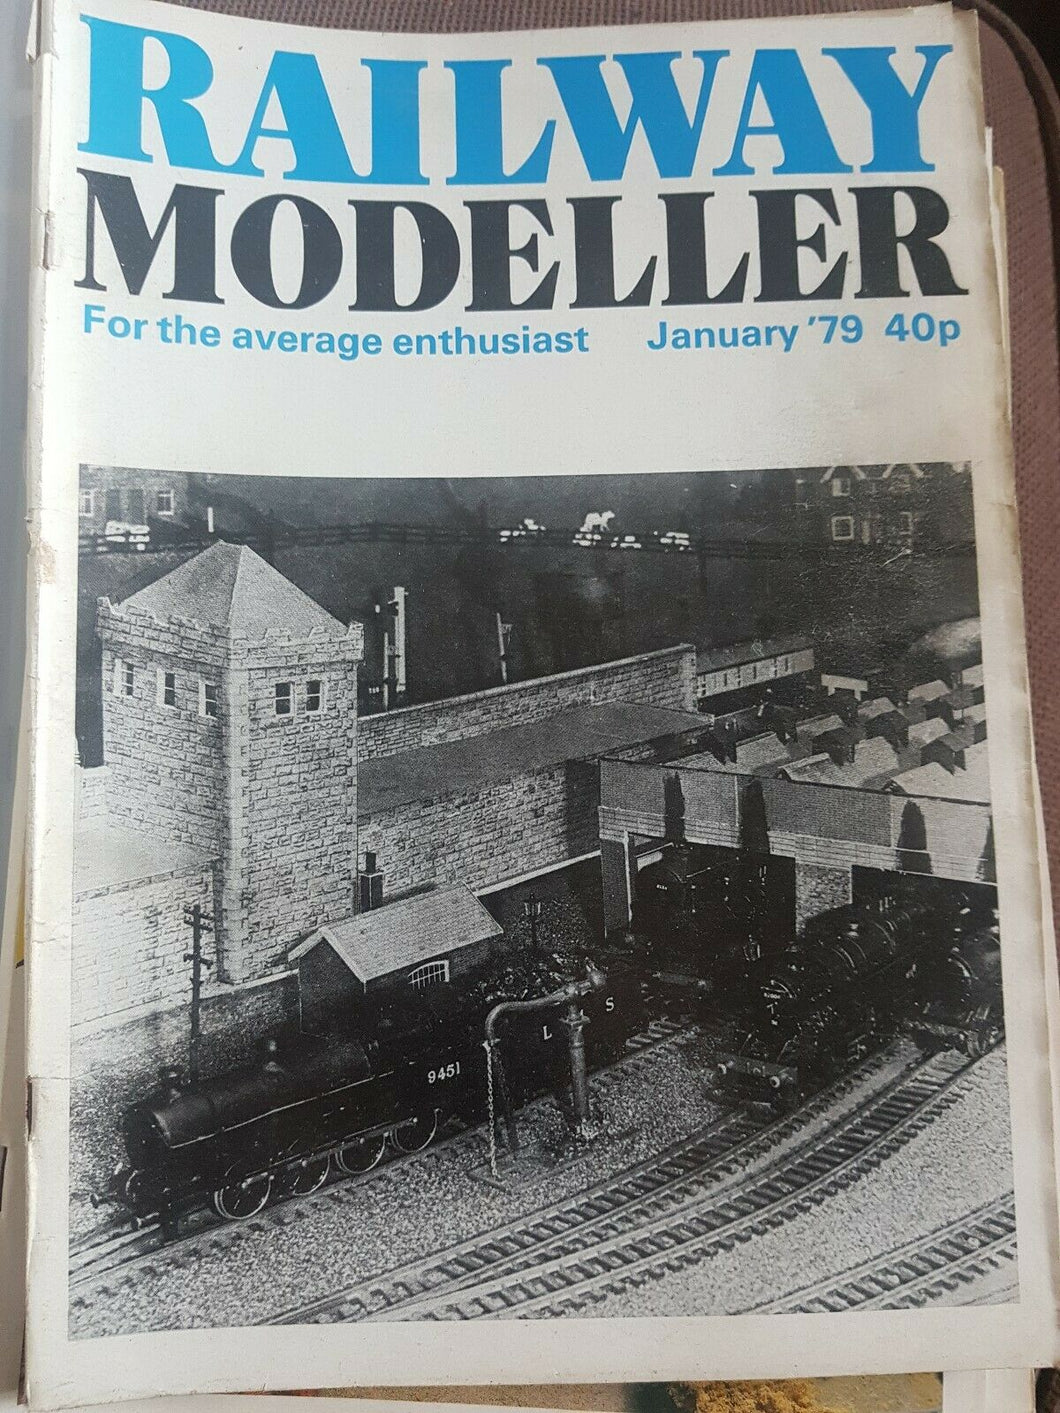 Railway modeller magazine January 1979